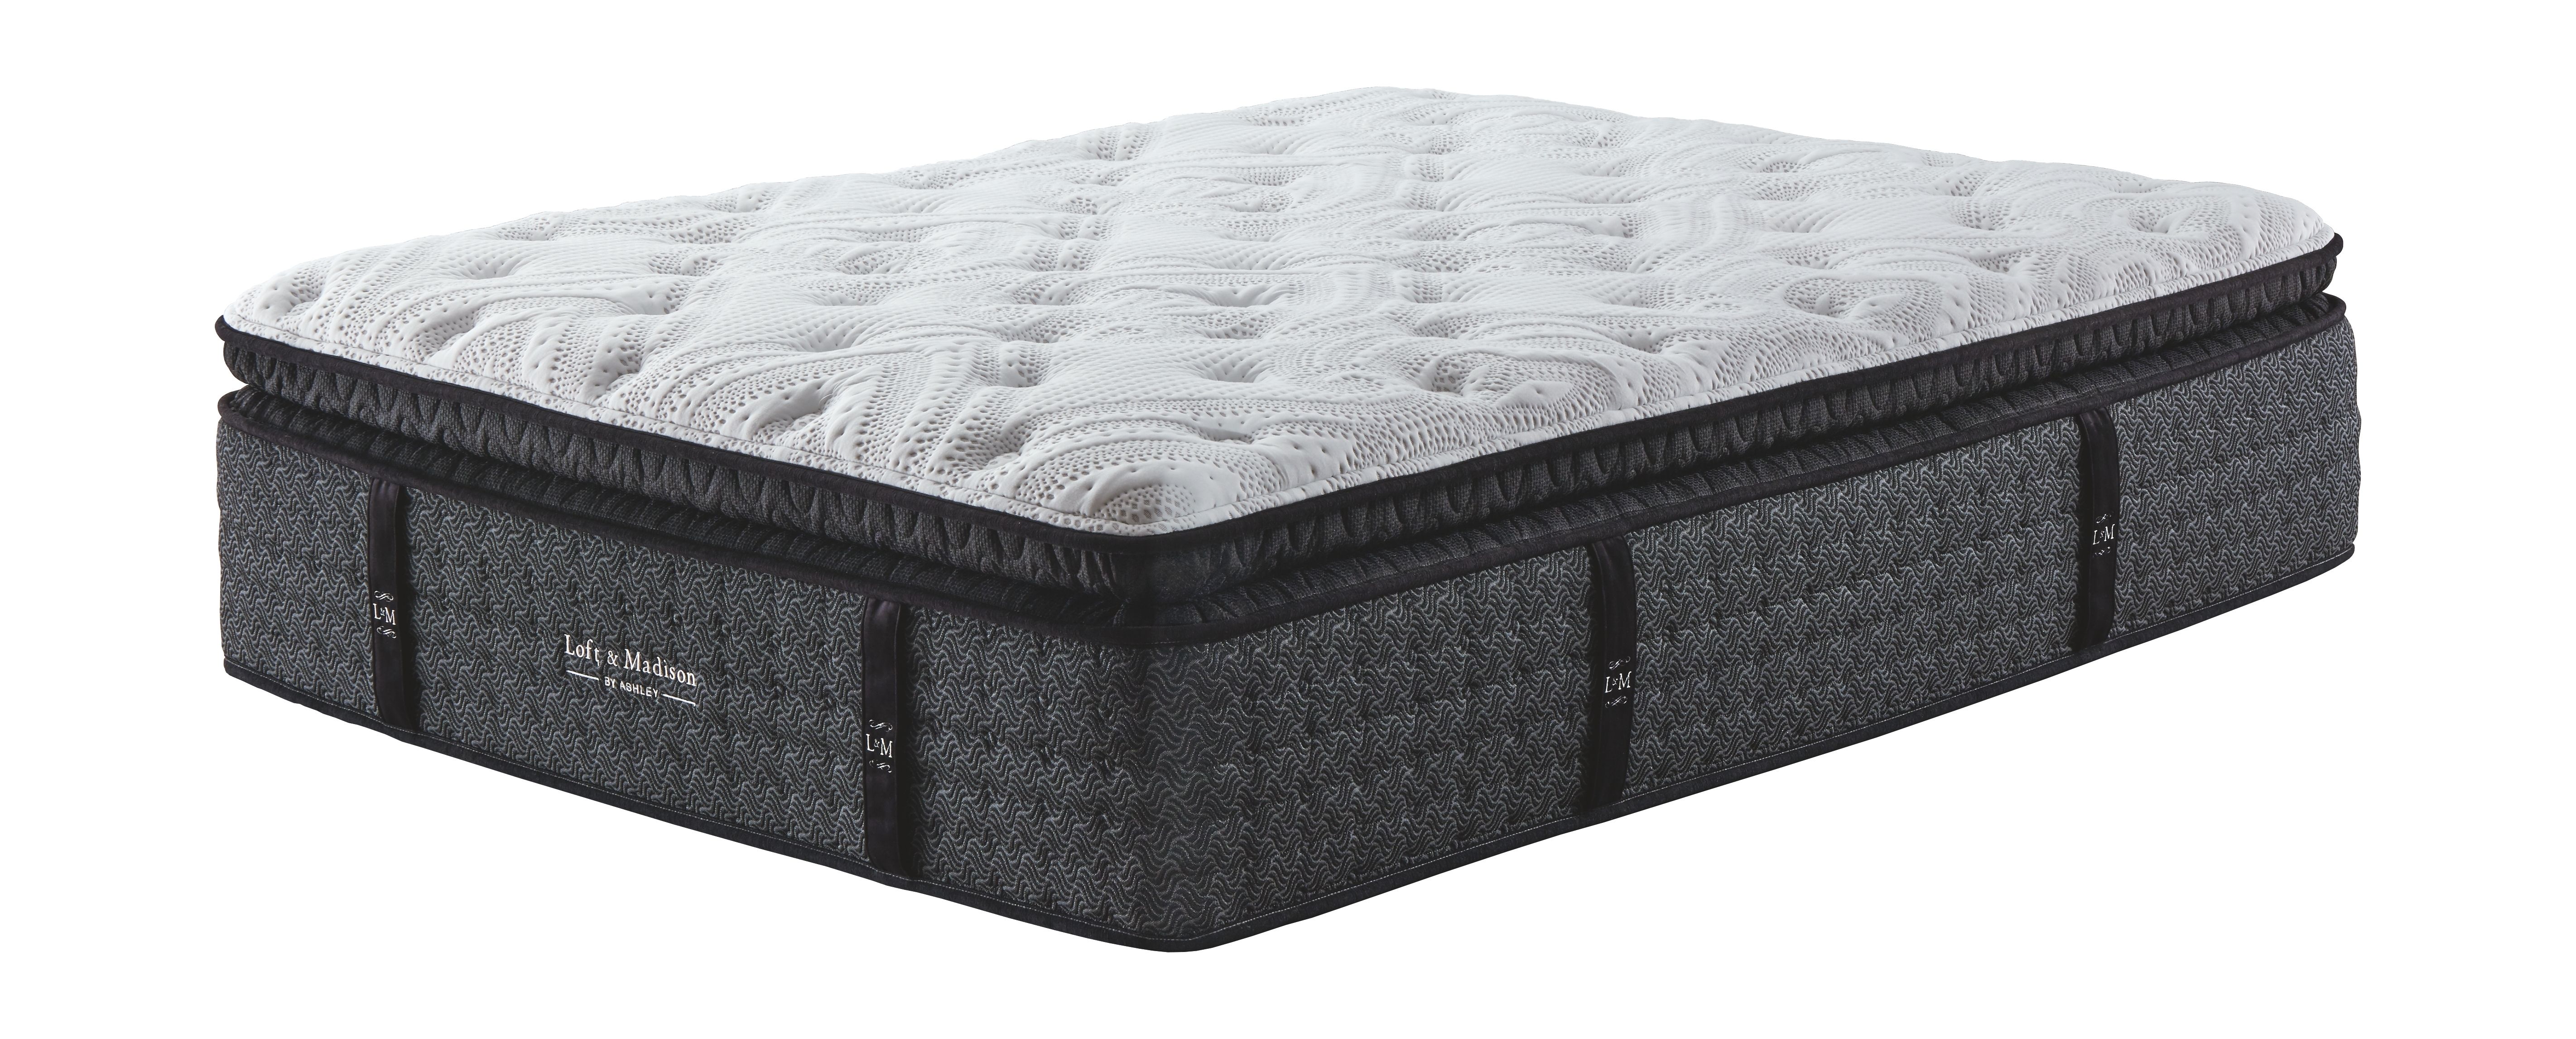 imperial grace ultra plush mattress